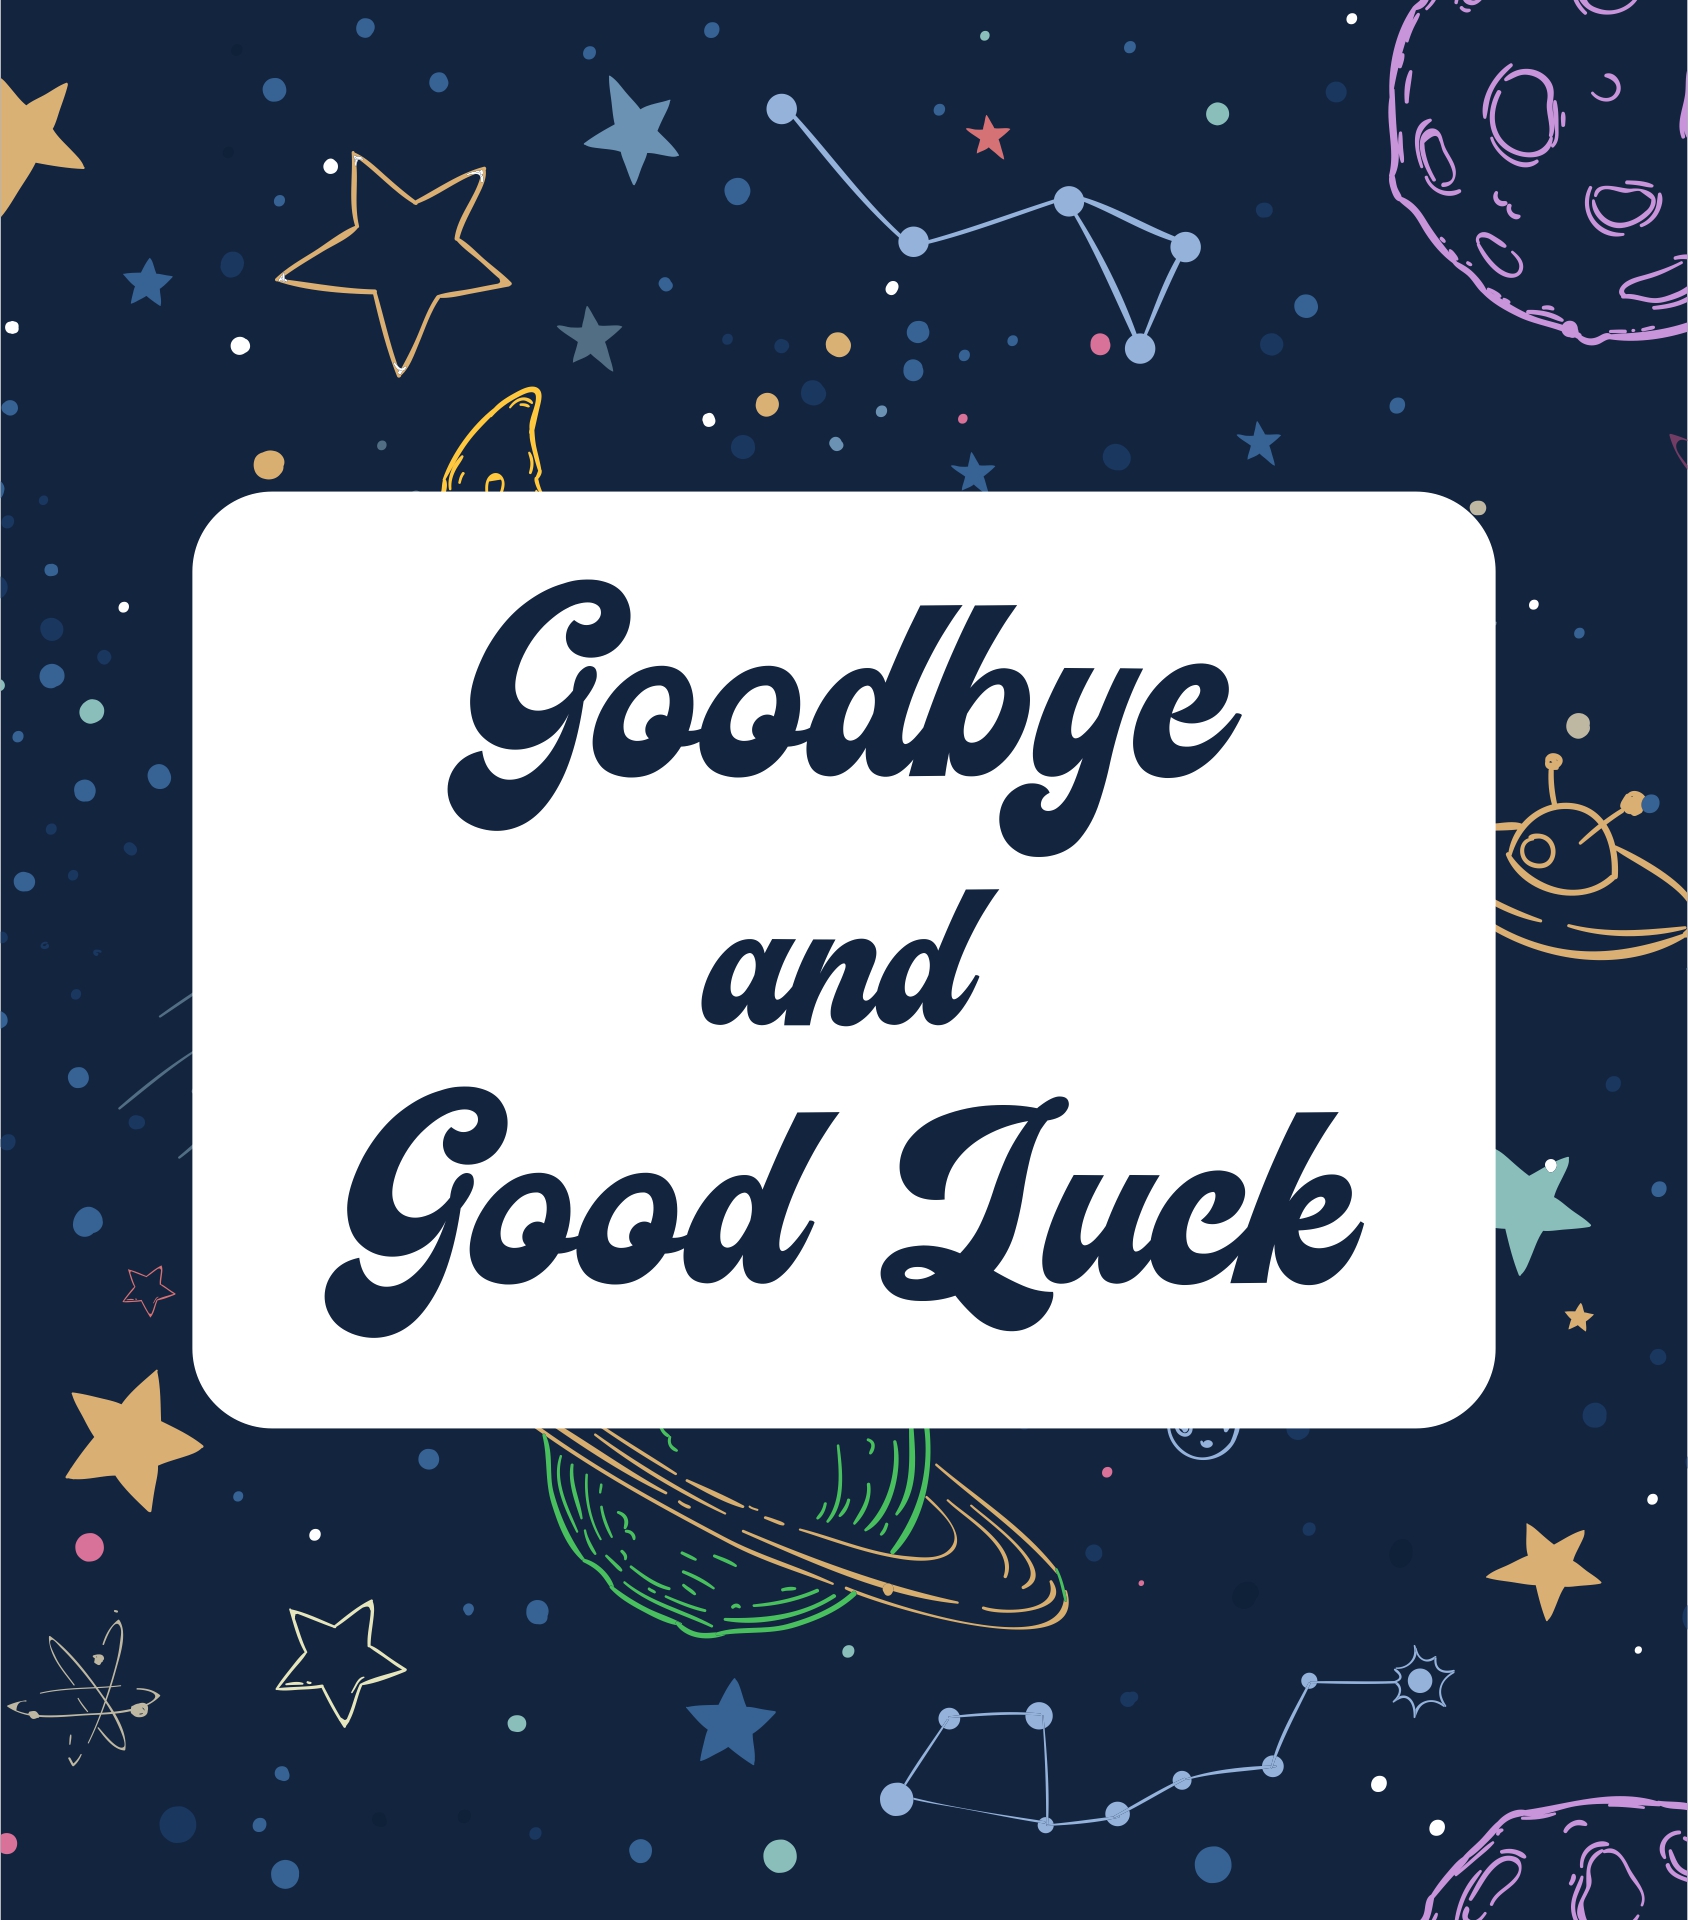 20 Best Good Bye Cards Printable - printablee.com In Good Luck Card Templates